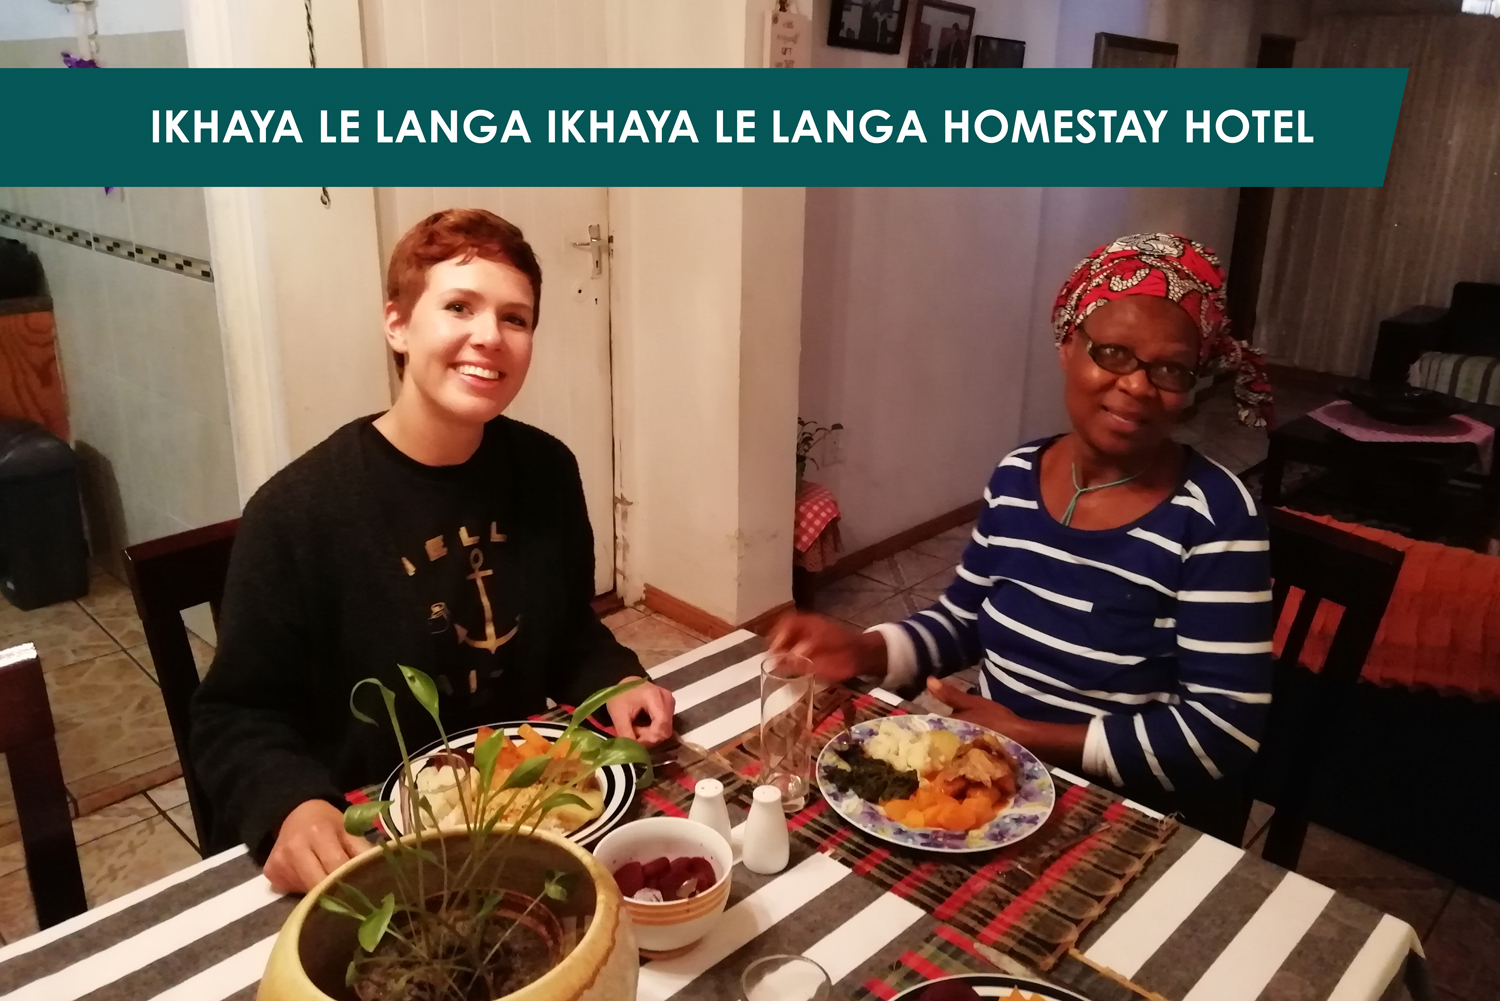 iKhaya Le Langa Homestay Hotel